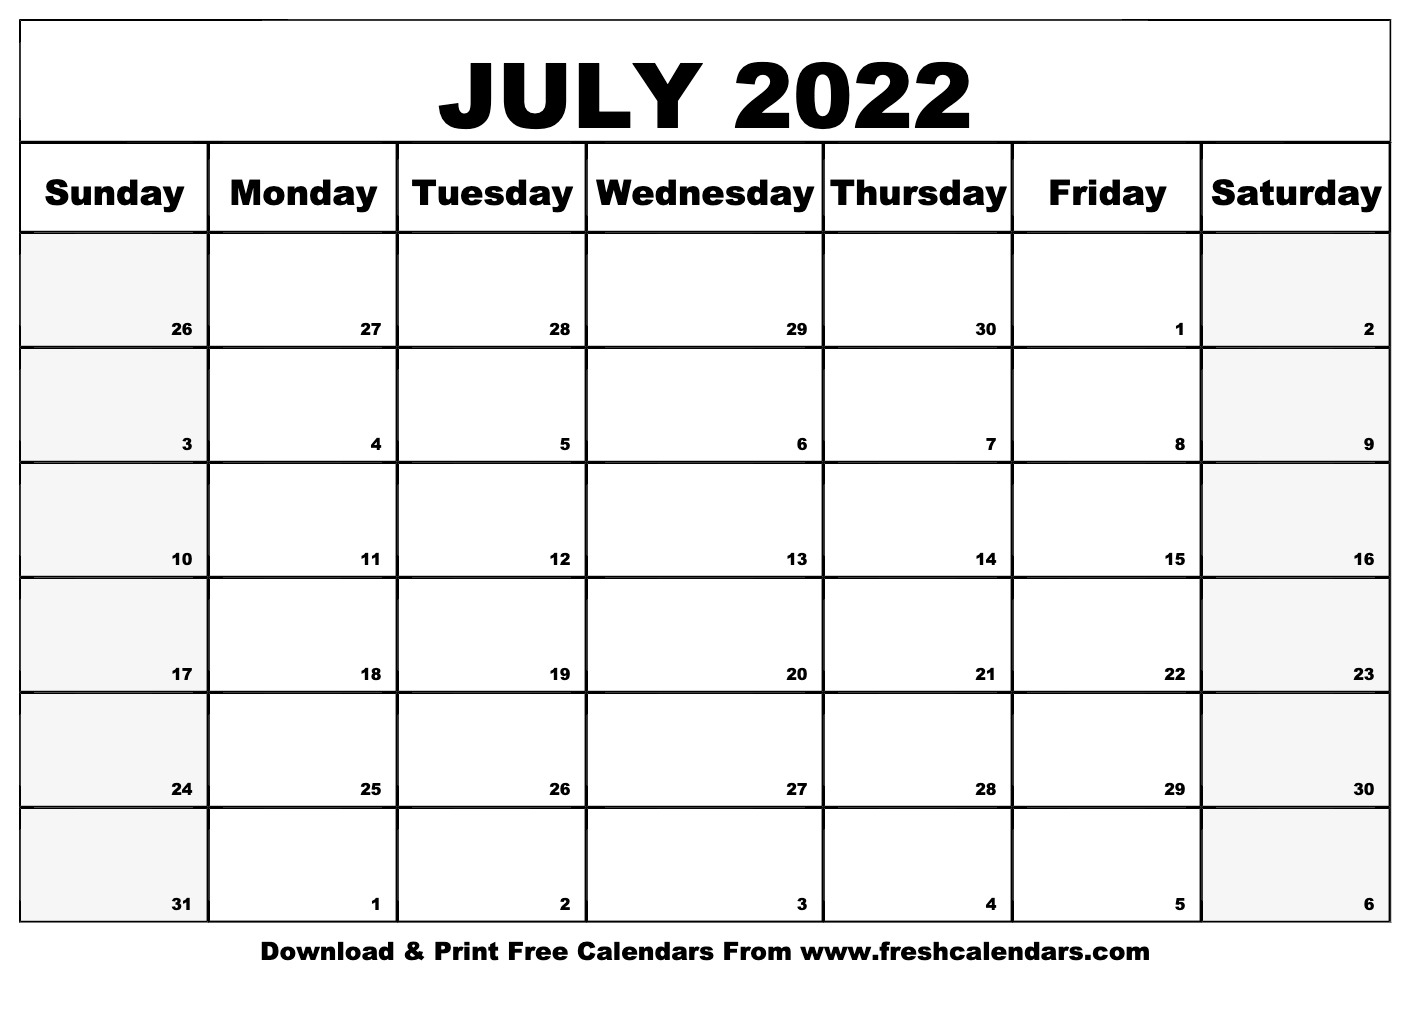 Take Calendar For 2022 July